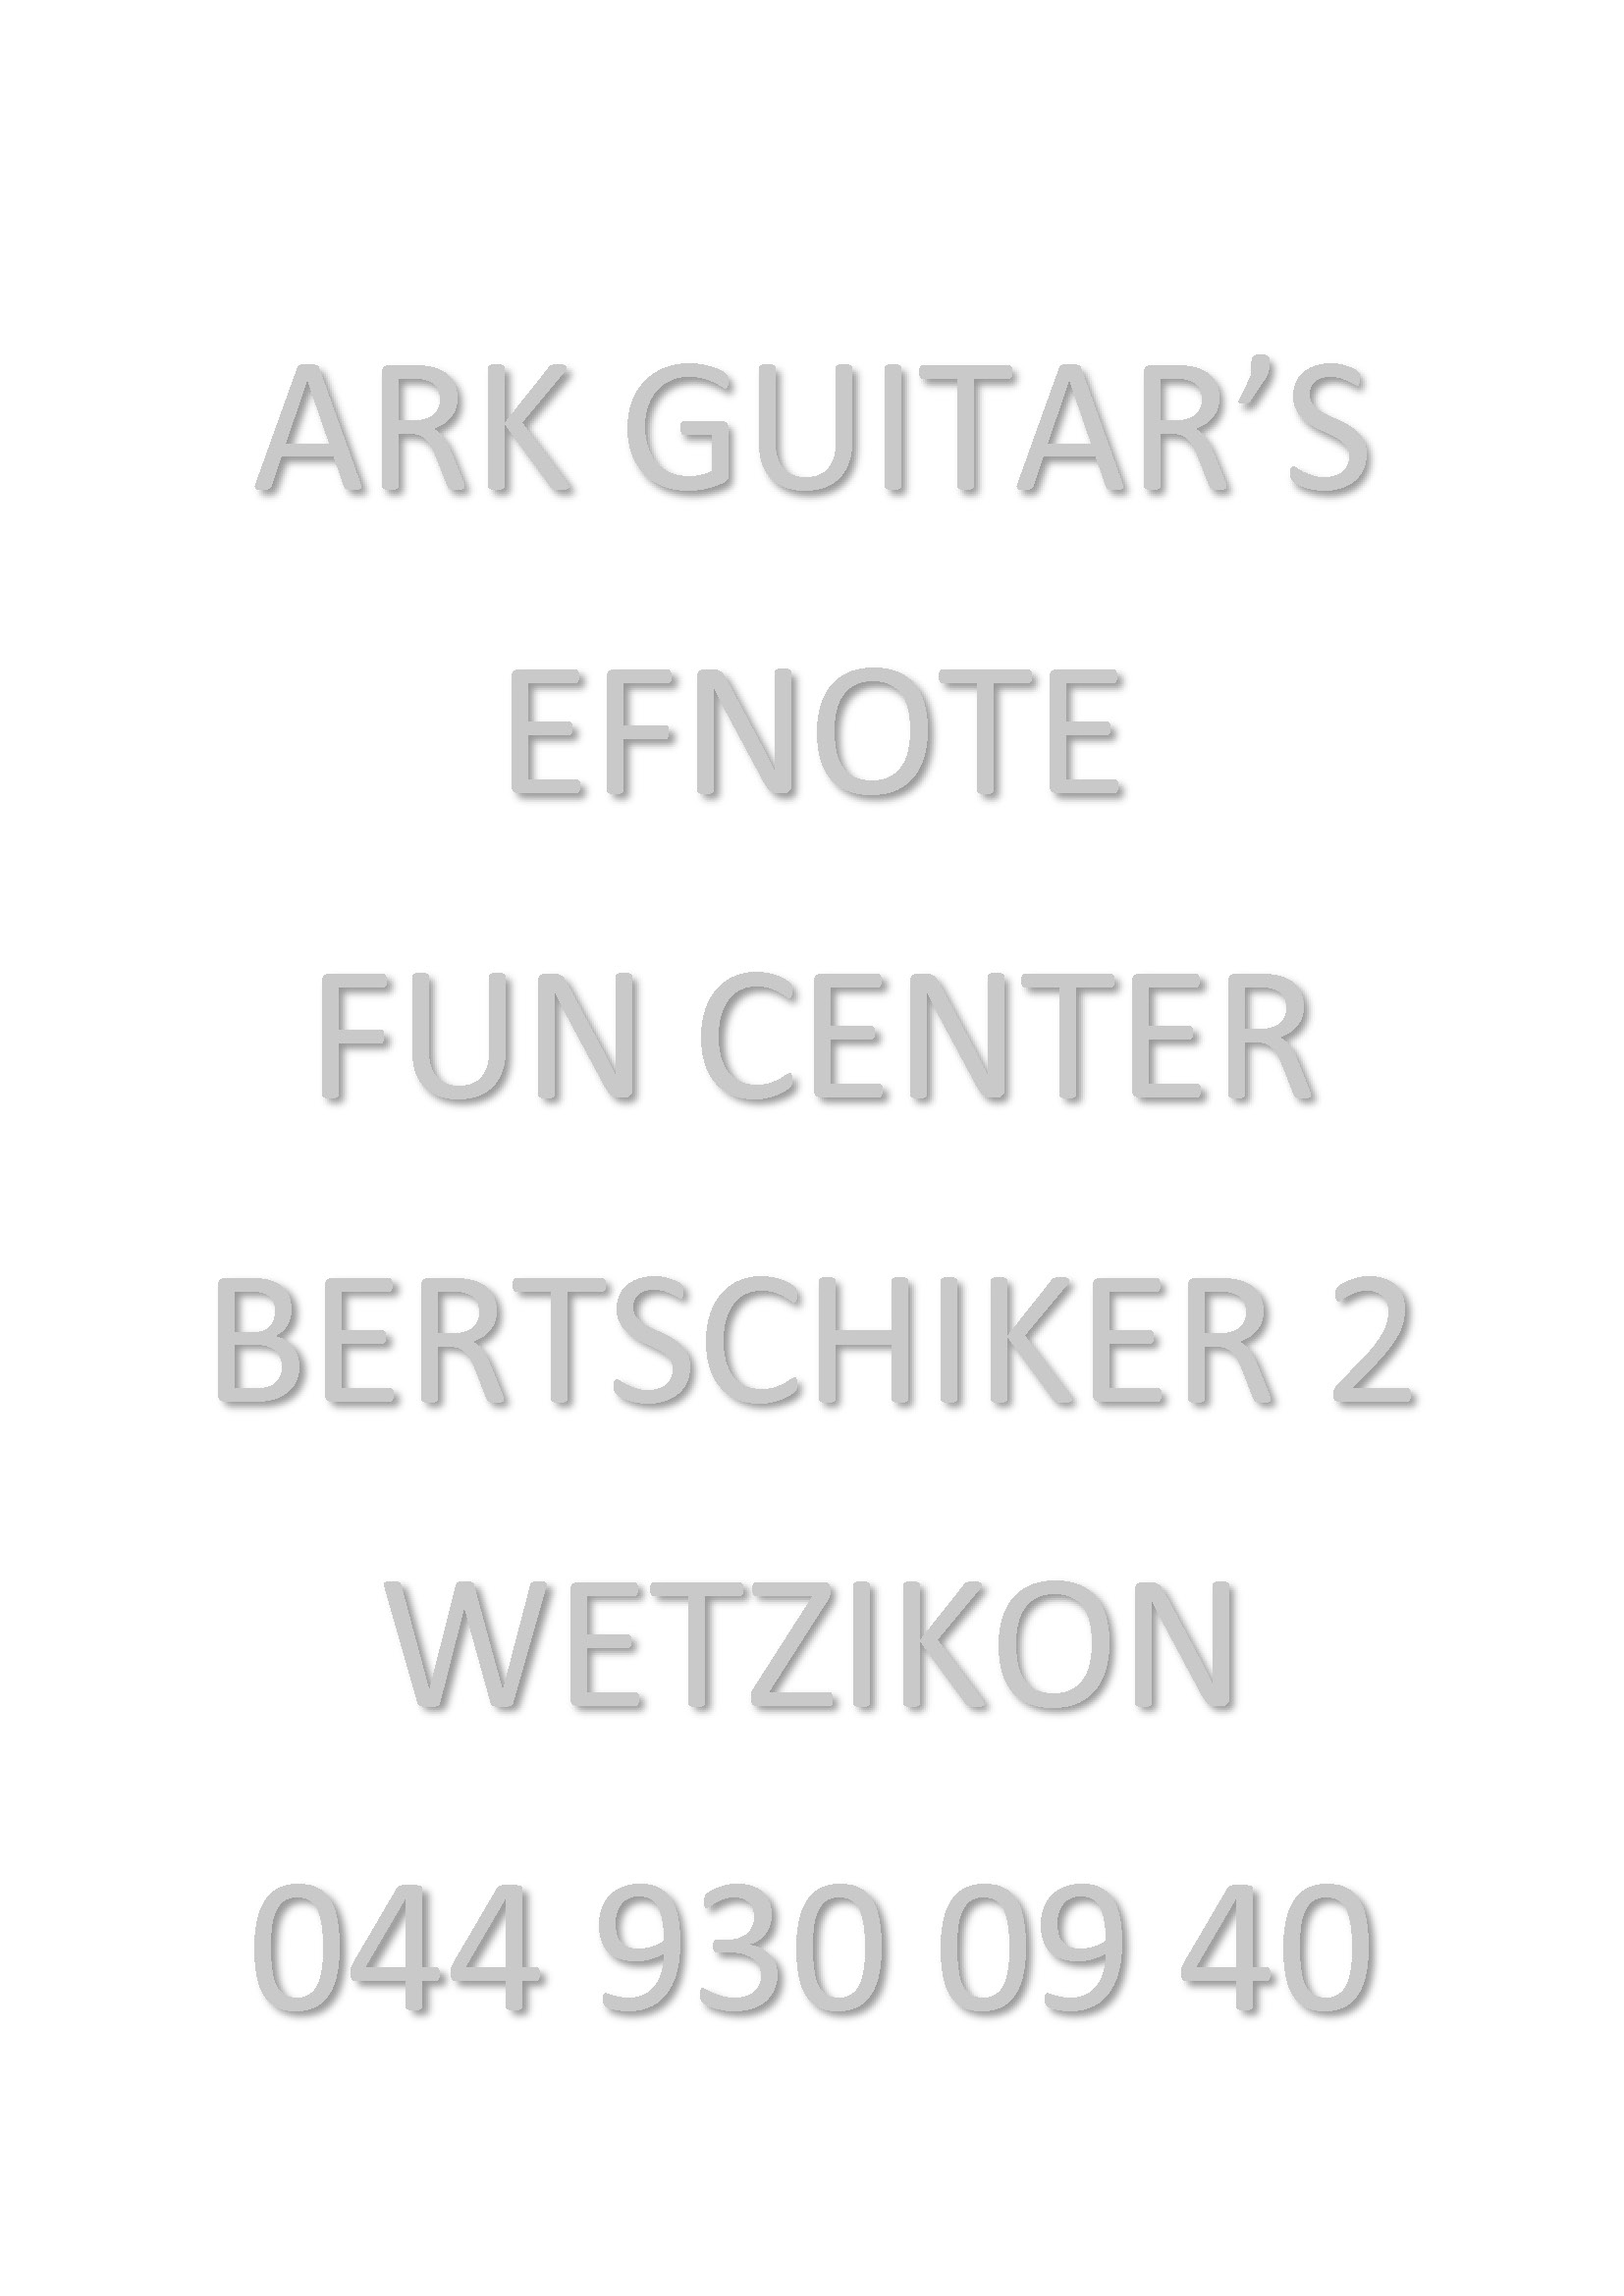 www.arkguitars.ch